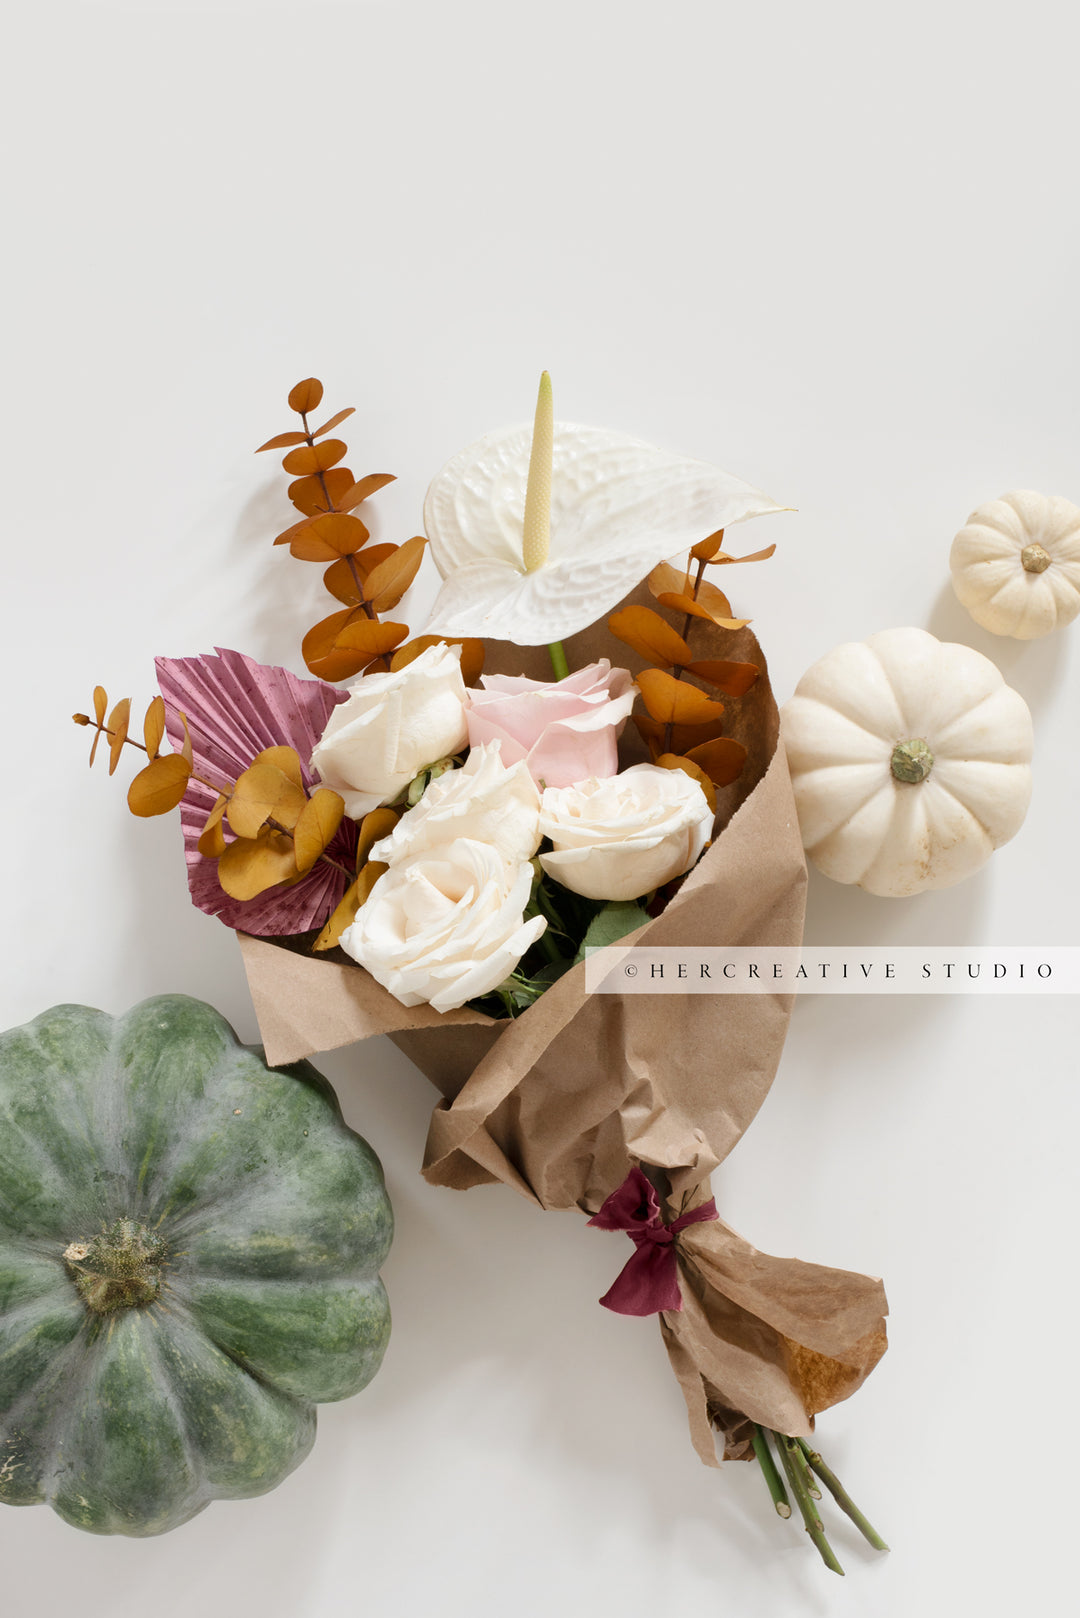 Pumpkins & Bouquet of Flowers. Digital Stock Image.